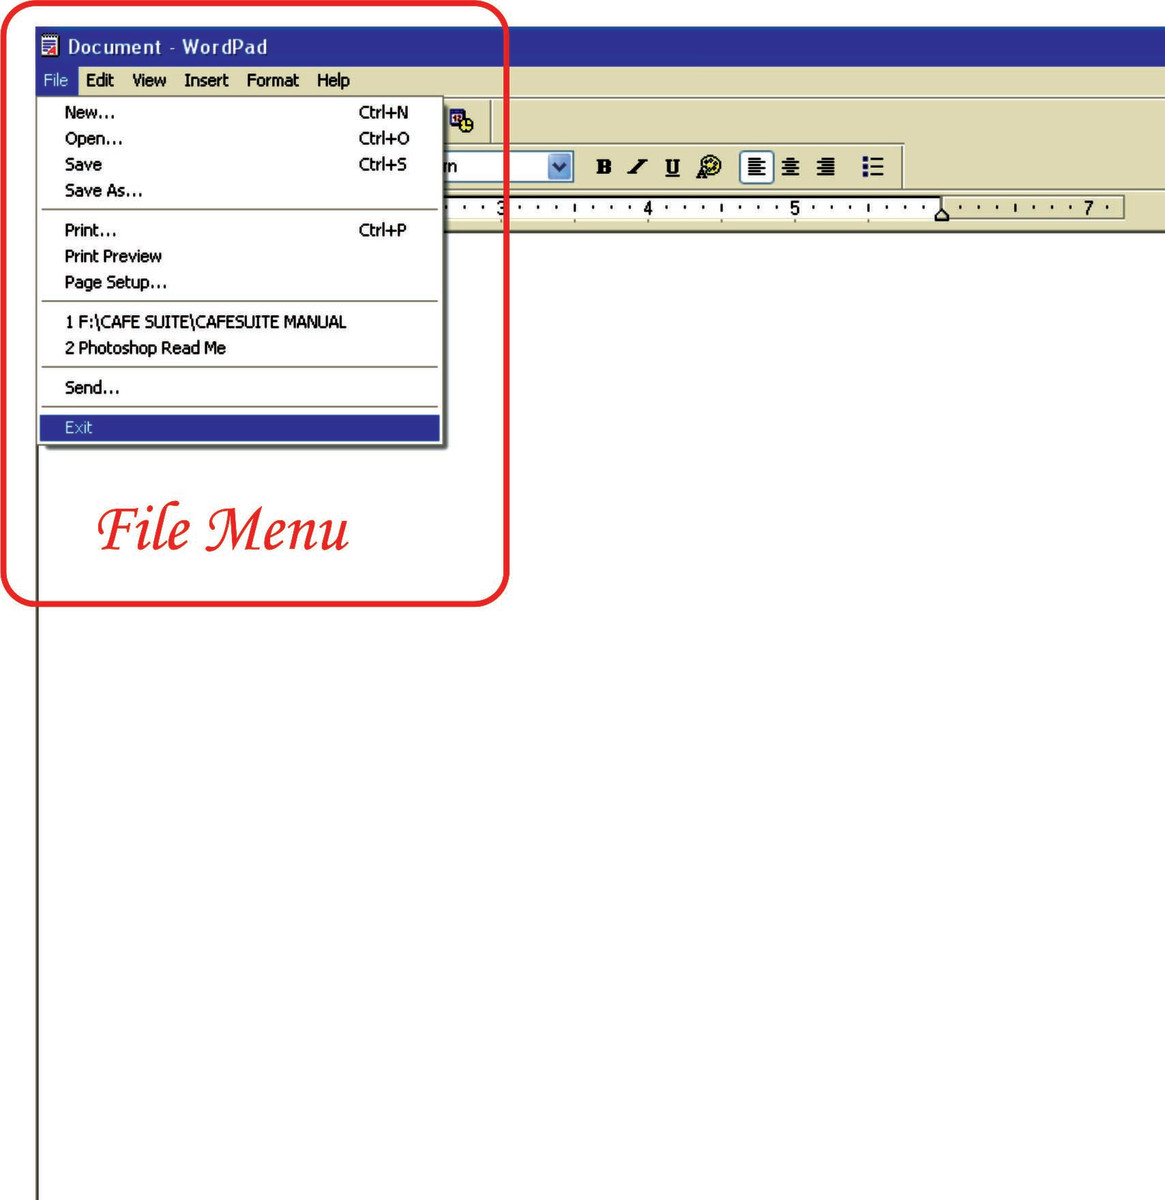 File Menu of WordPad